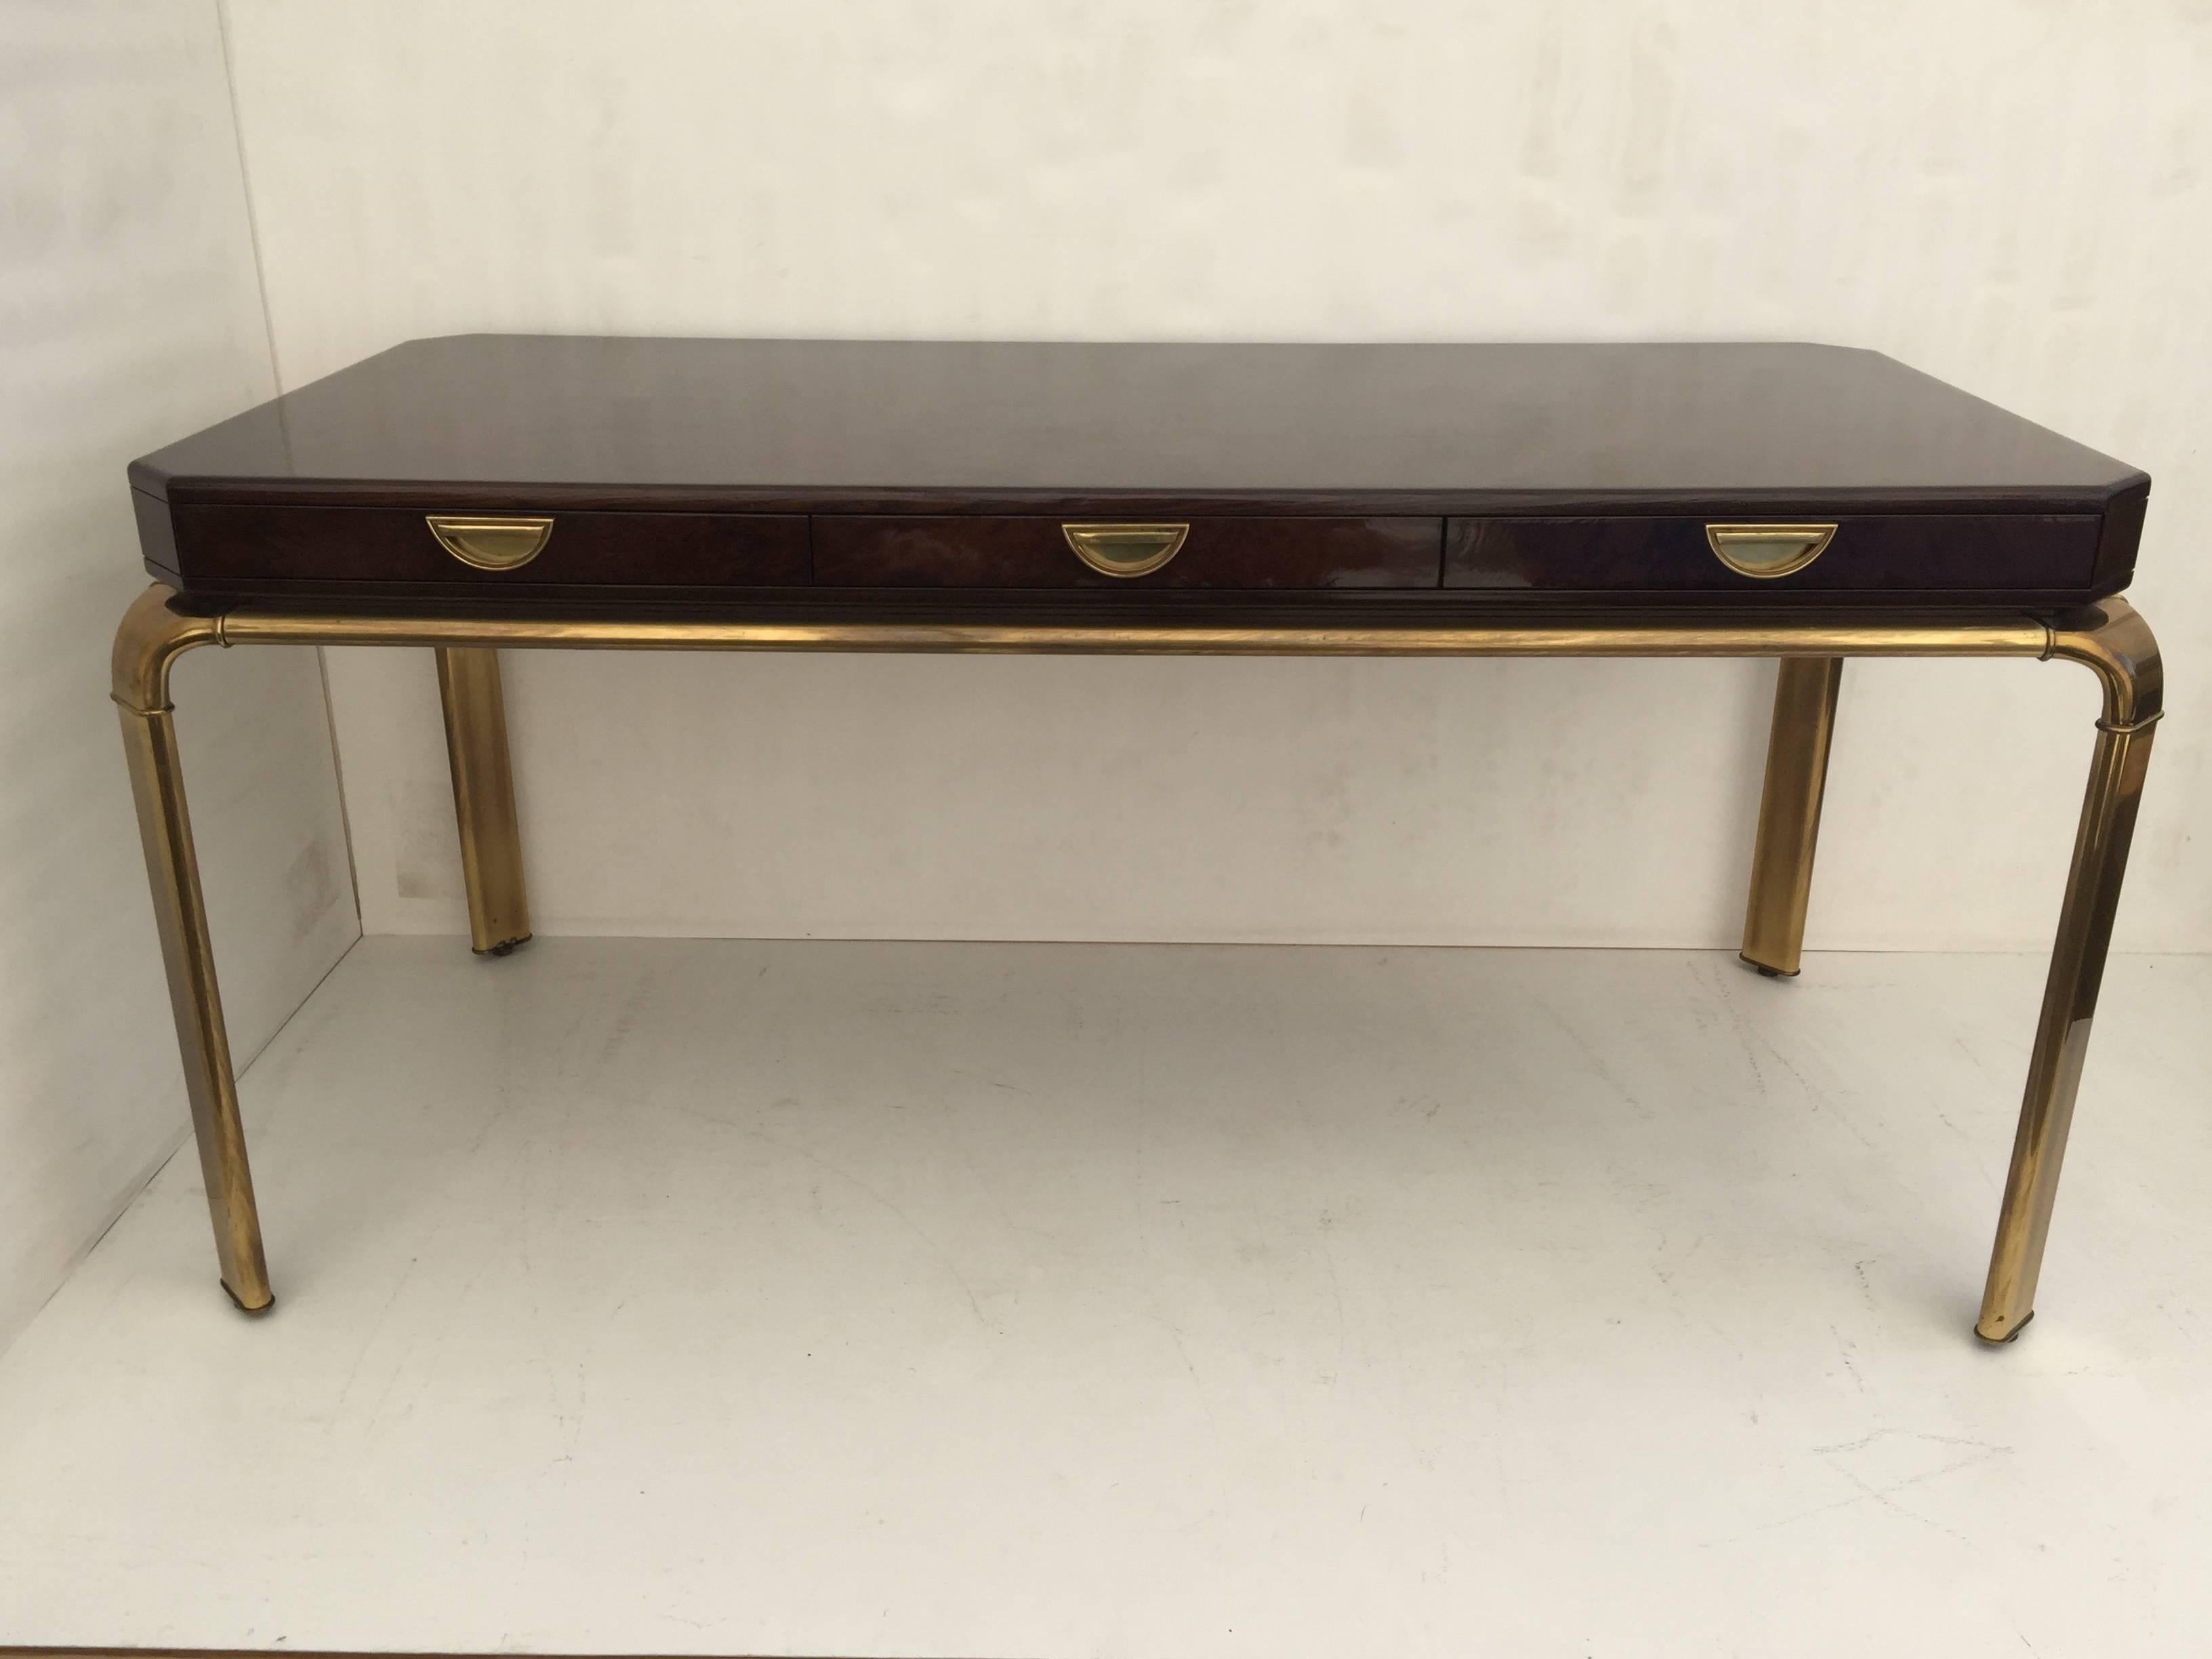 High gloss polyurethane burl wood and patinated brass desk by John Widdicomb.
 